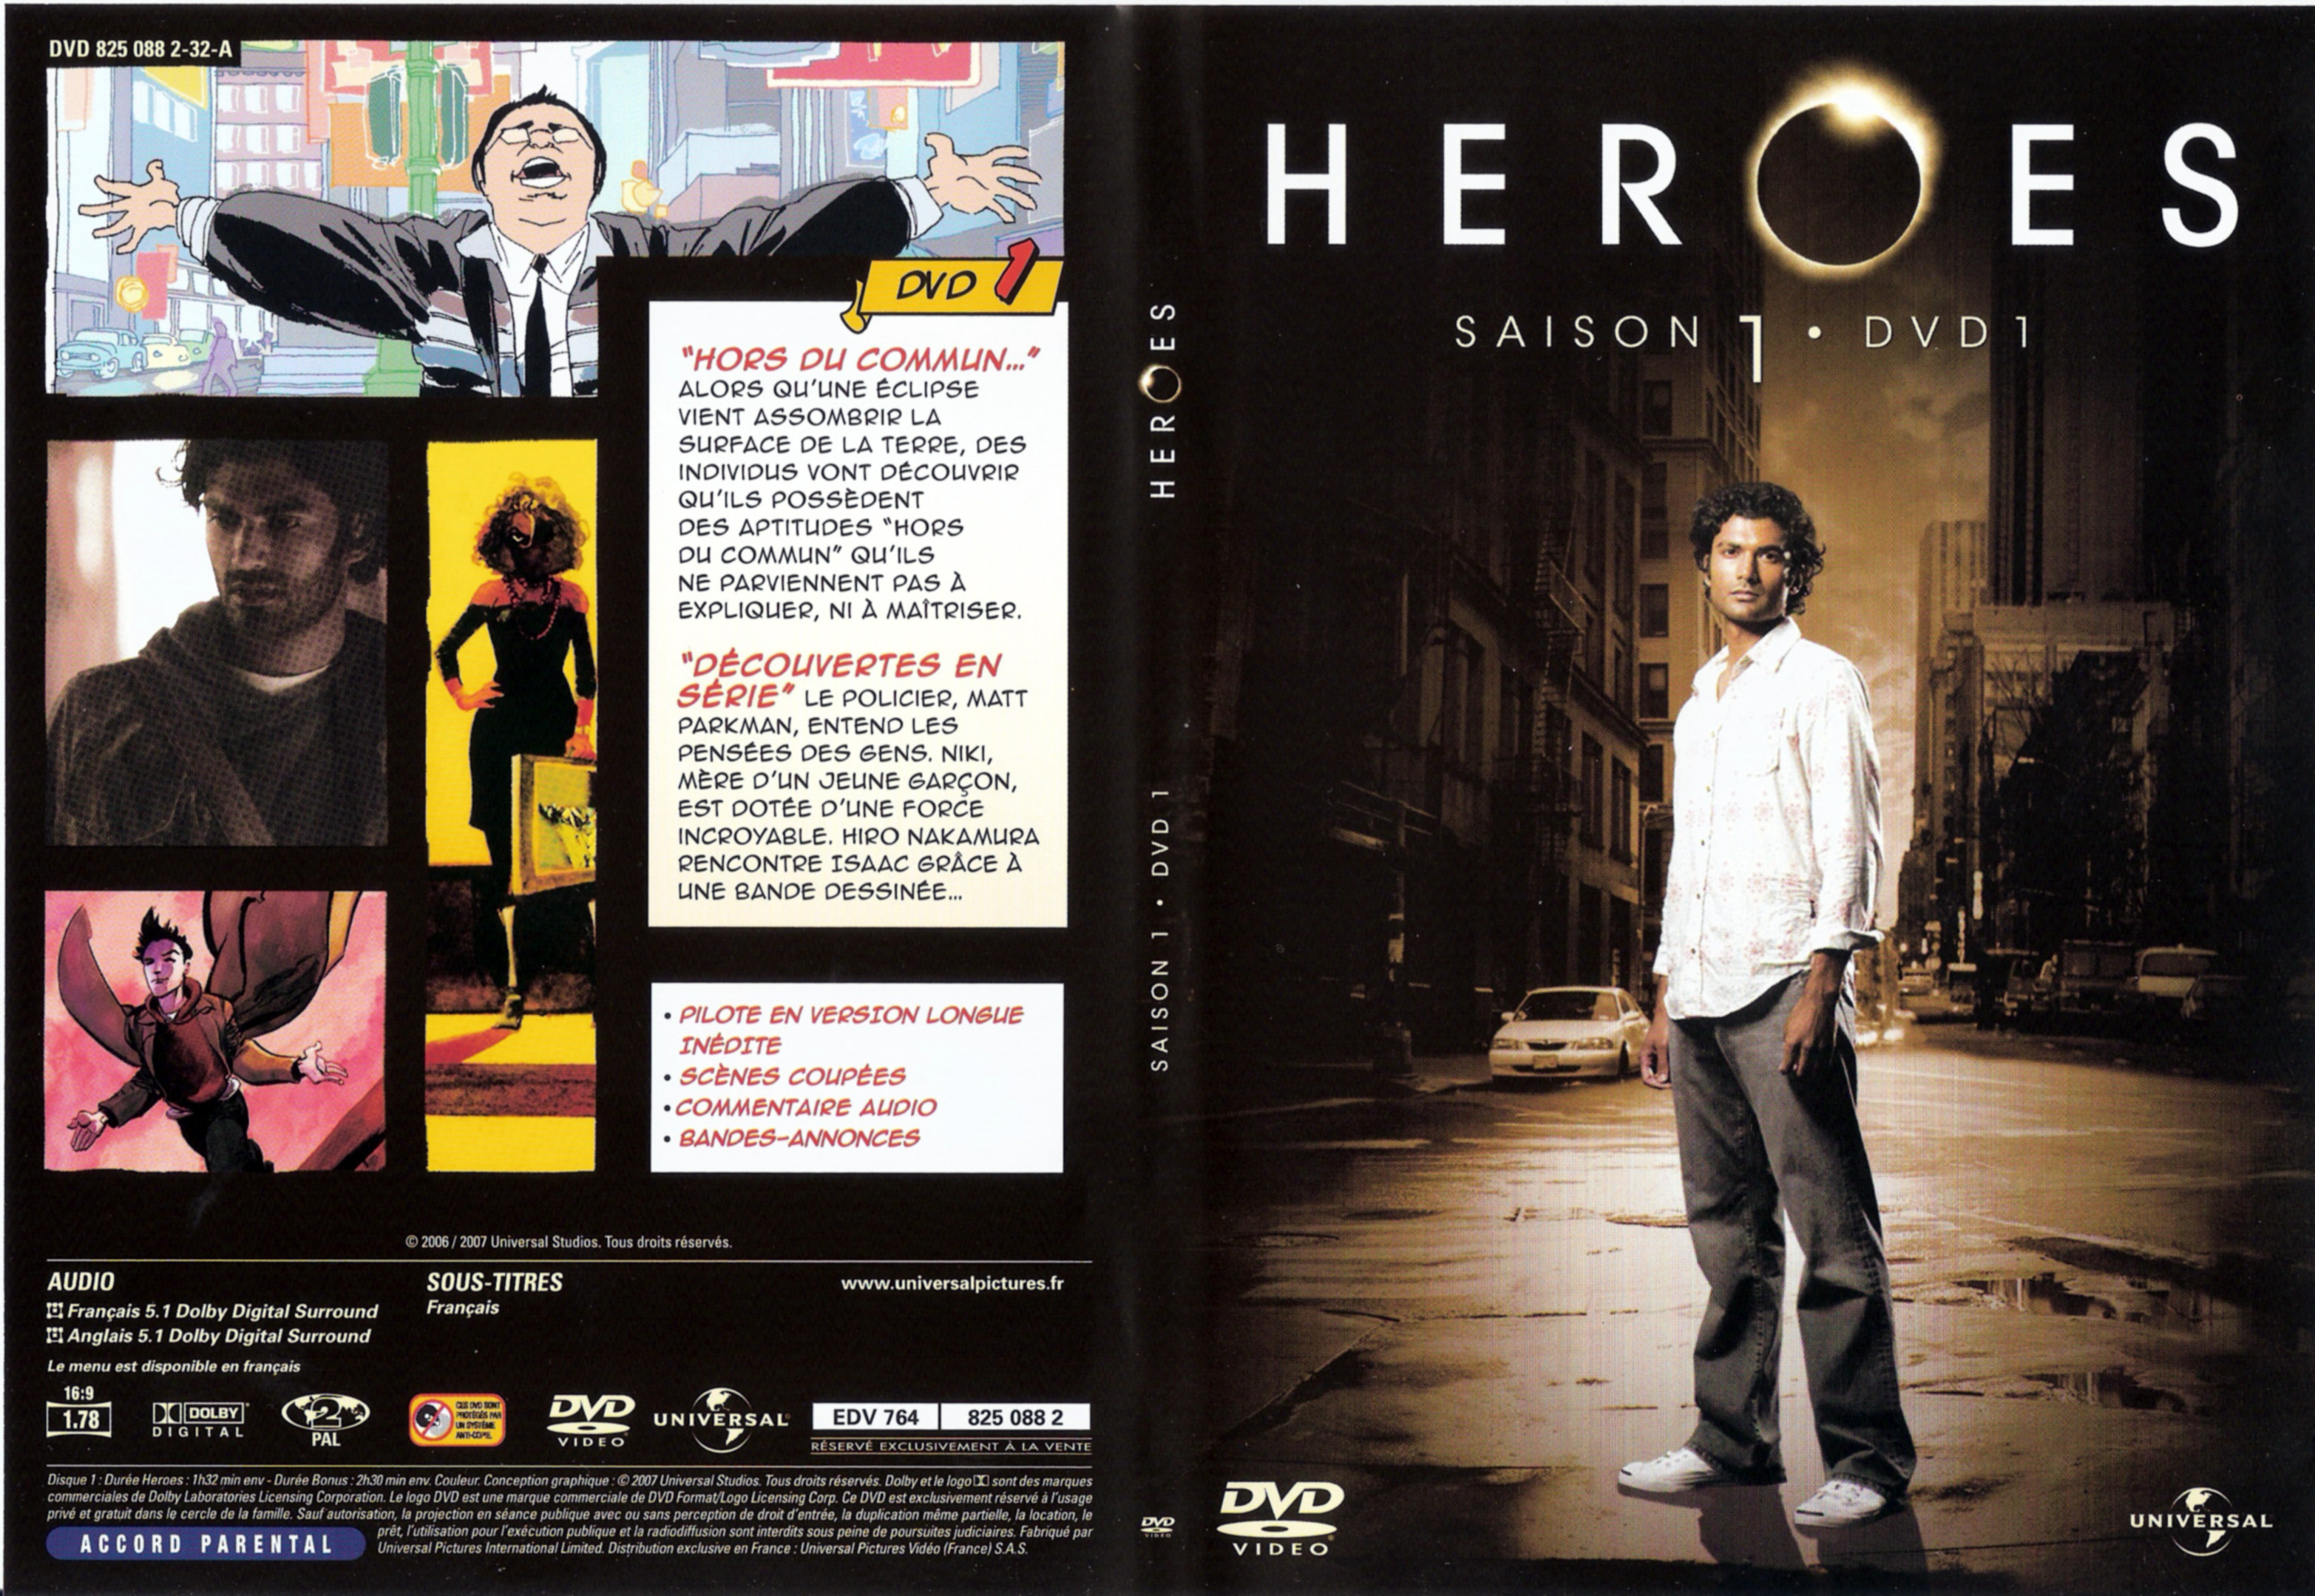 Jaquette DVD Heroes saison 1 DVD 1